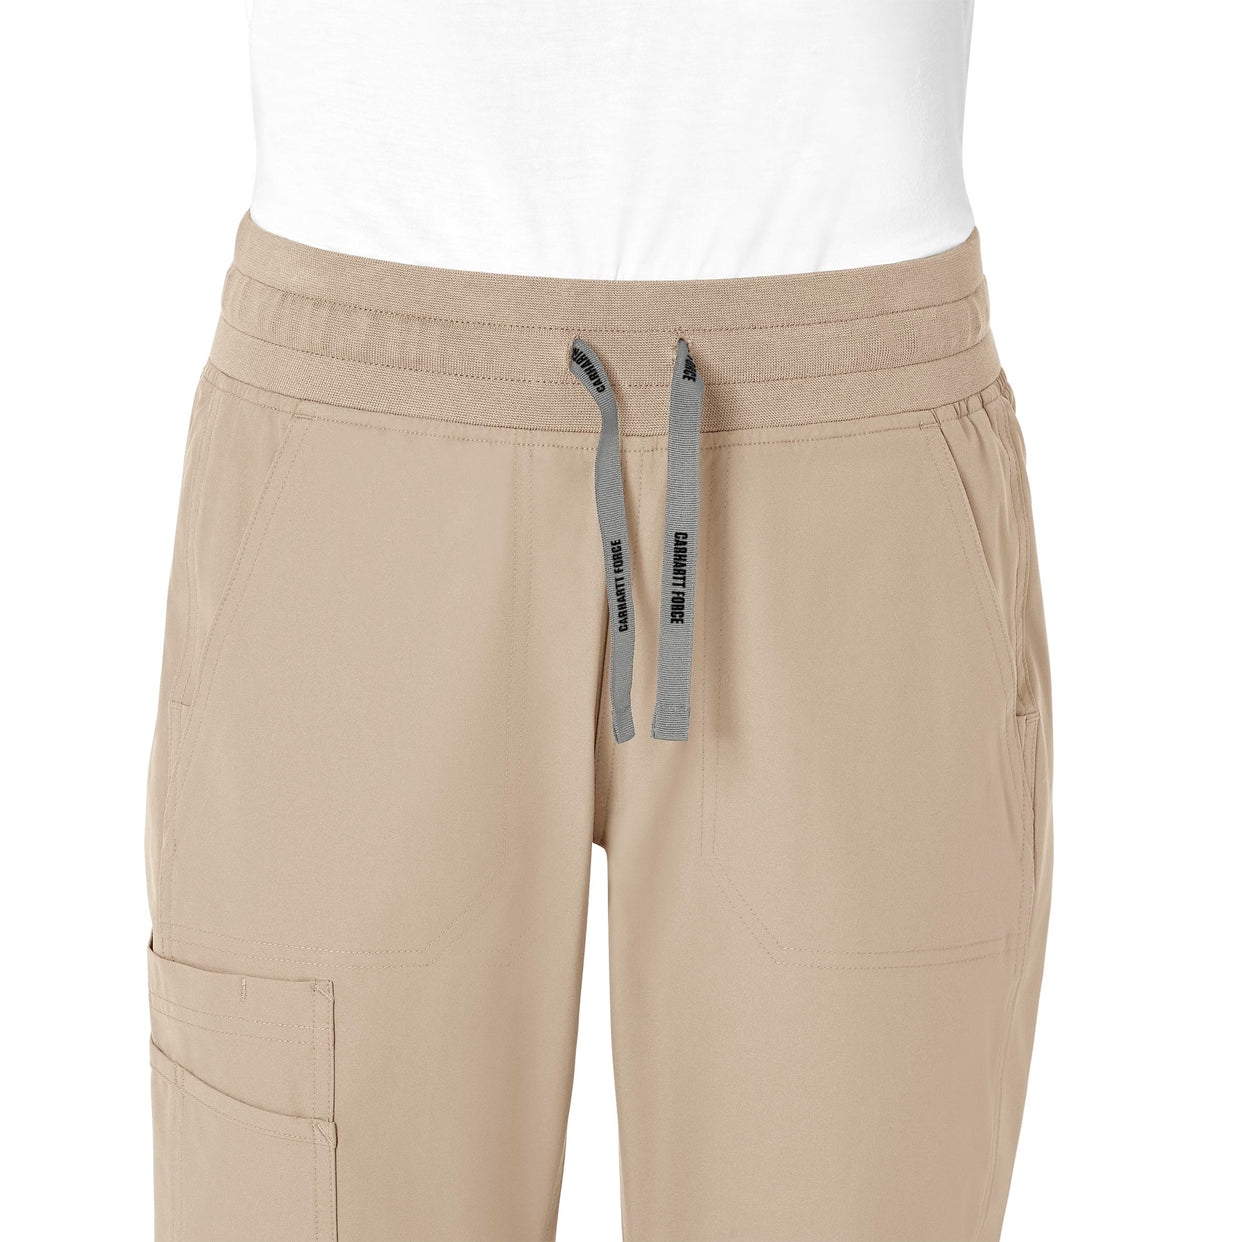 Force Essentials Women's Jogger Scrub Pant Khaki front detail